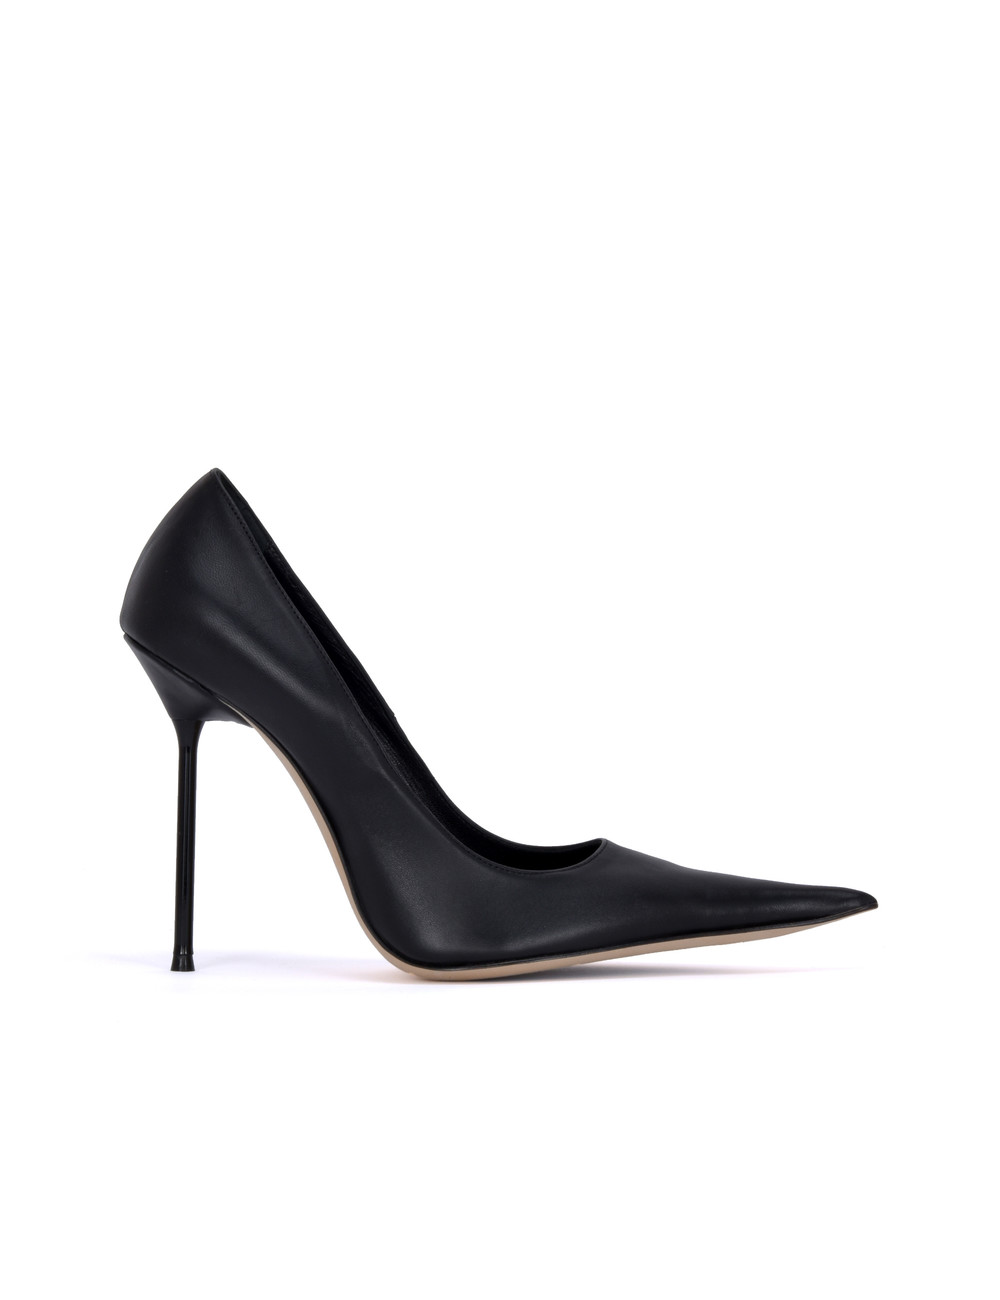 Sanctum CRUELLA EXTREME POINTY PUMPS BLACK NAPPA - Shoebidoo Shoes